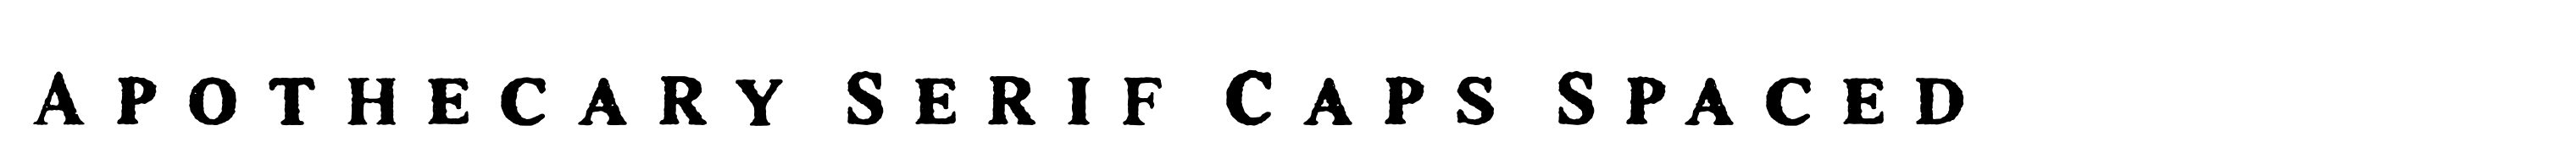 Apothecary Serif Caps Spaced